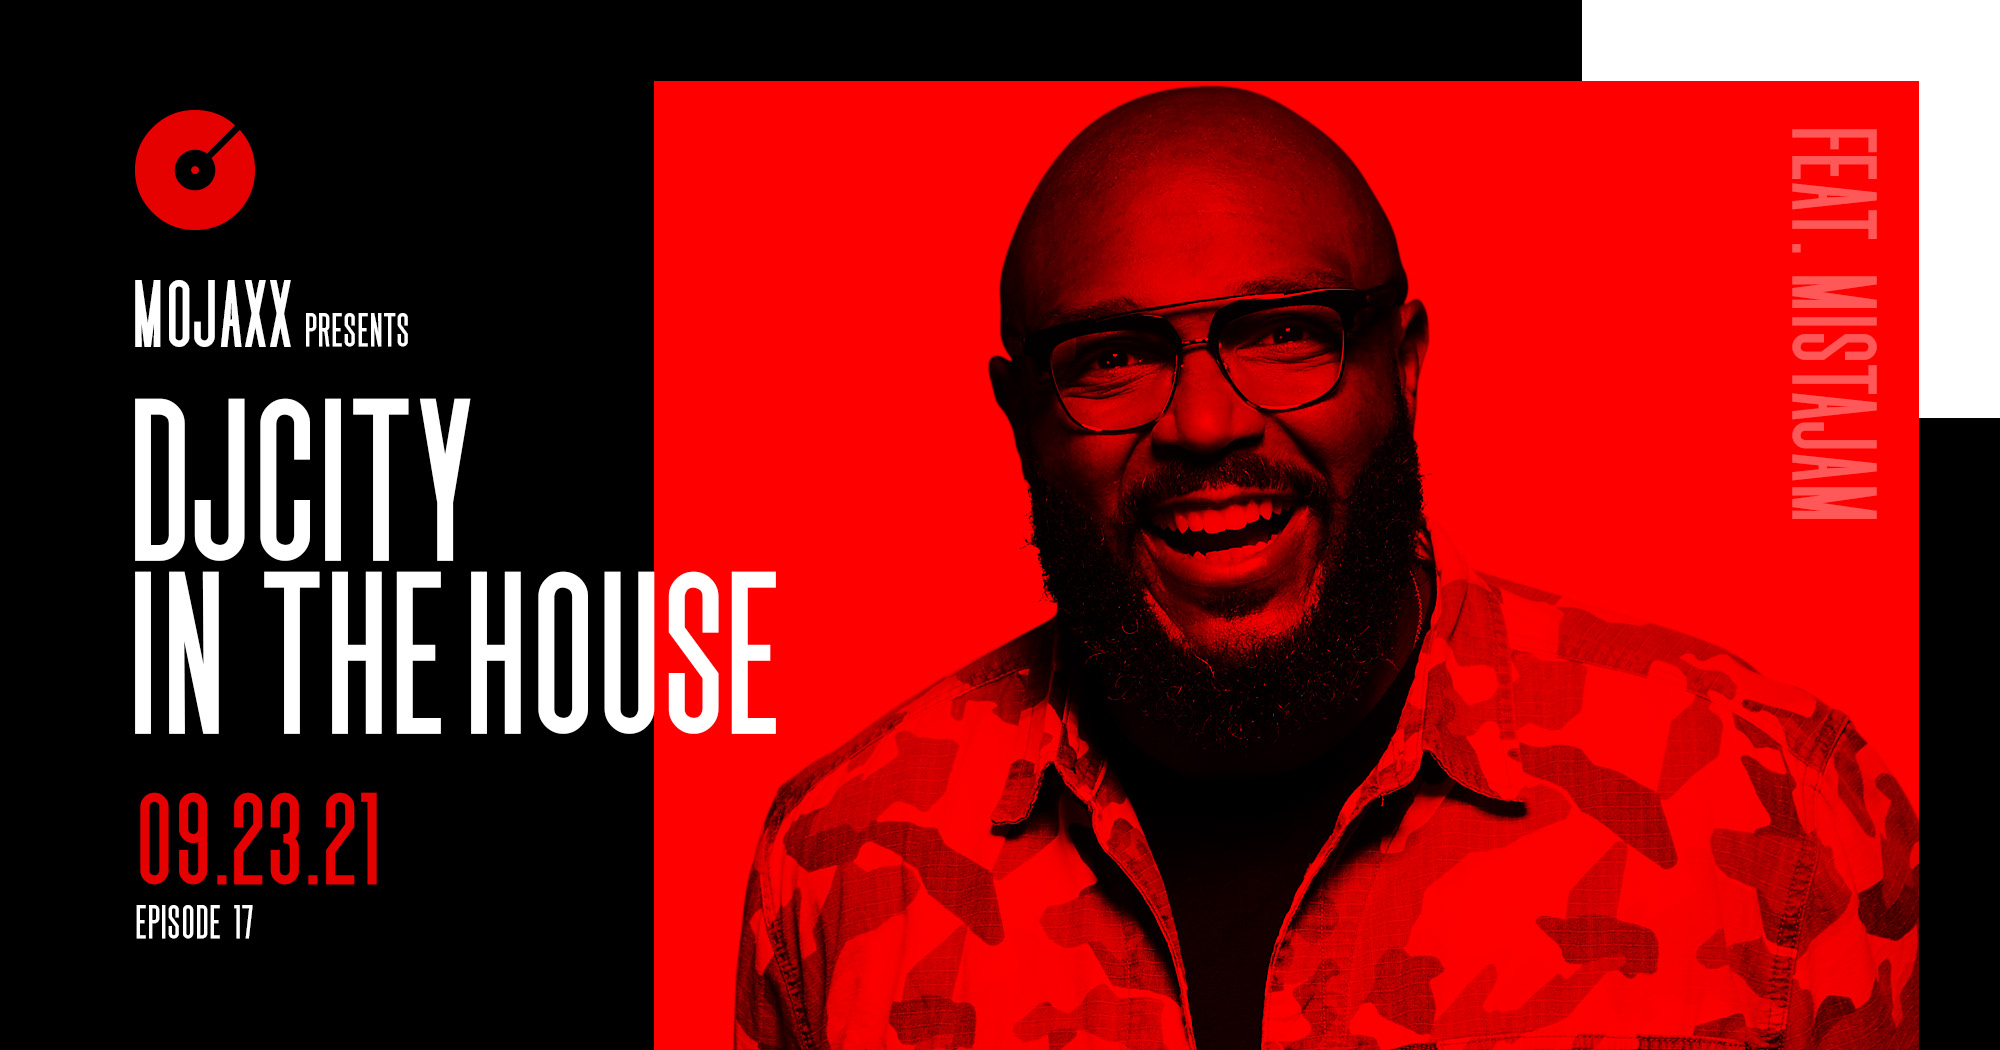 Listen to ‘DJcity in the House’ Feat. Mojaxx: September 23